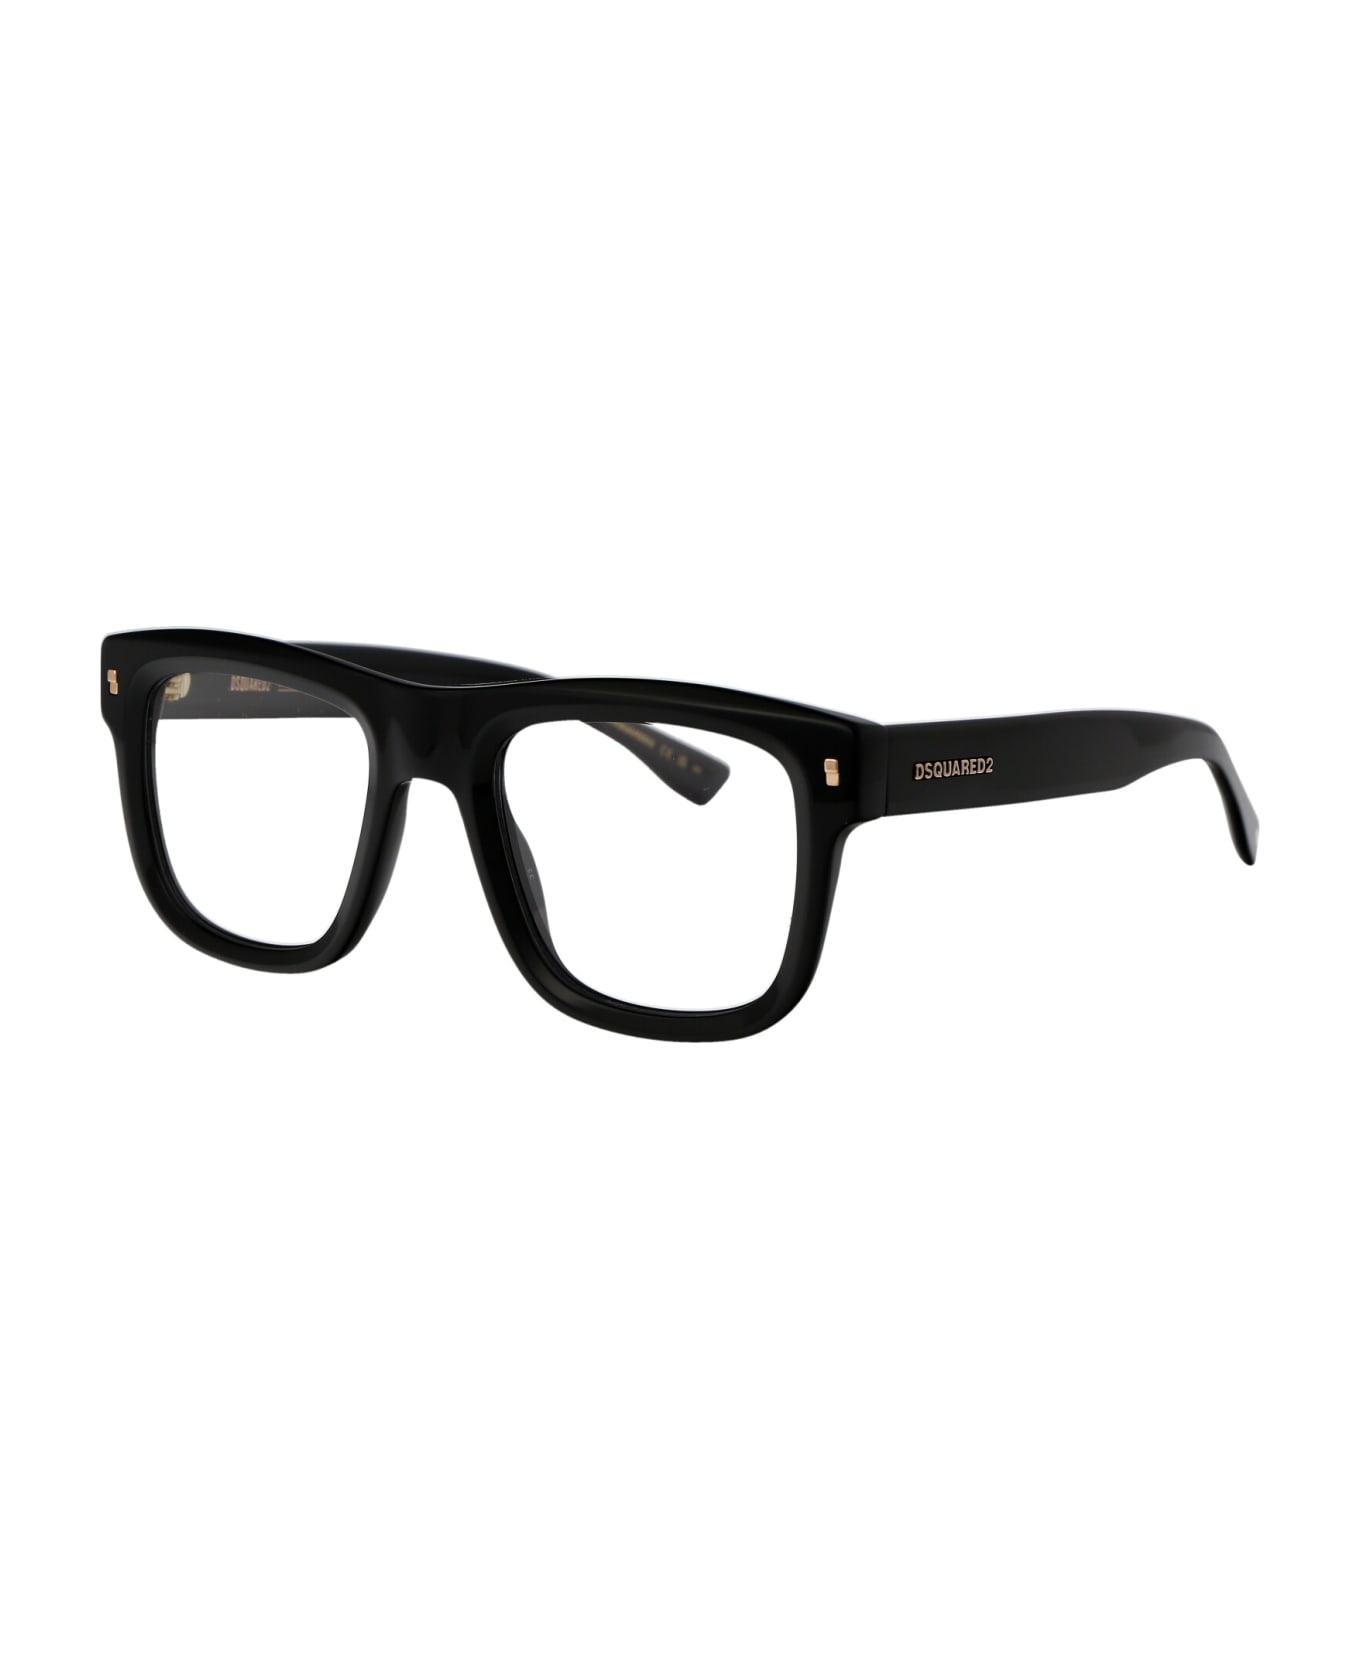 Dsquared2 Eyewear D2 0114 Glasses - 807 BLACK